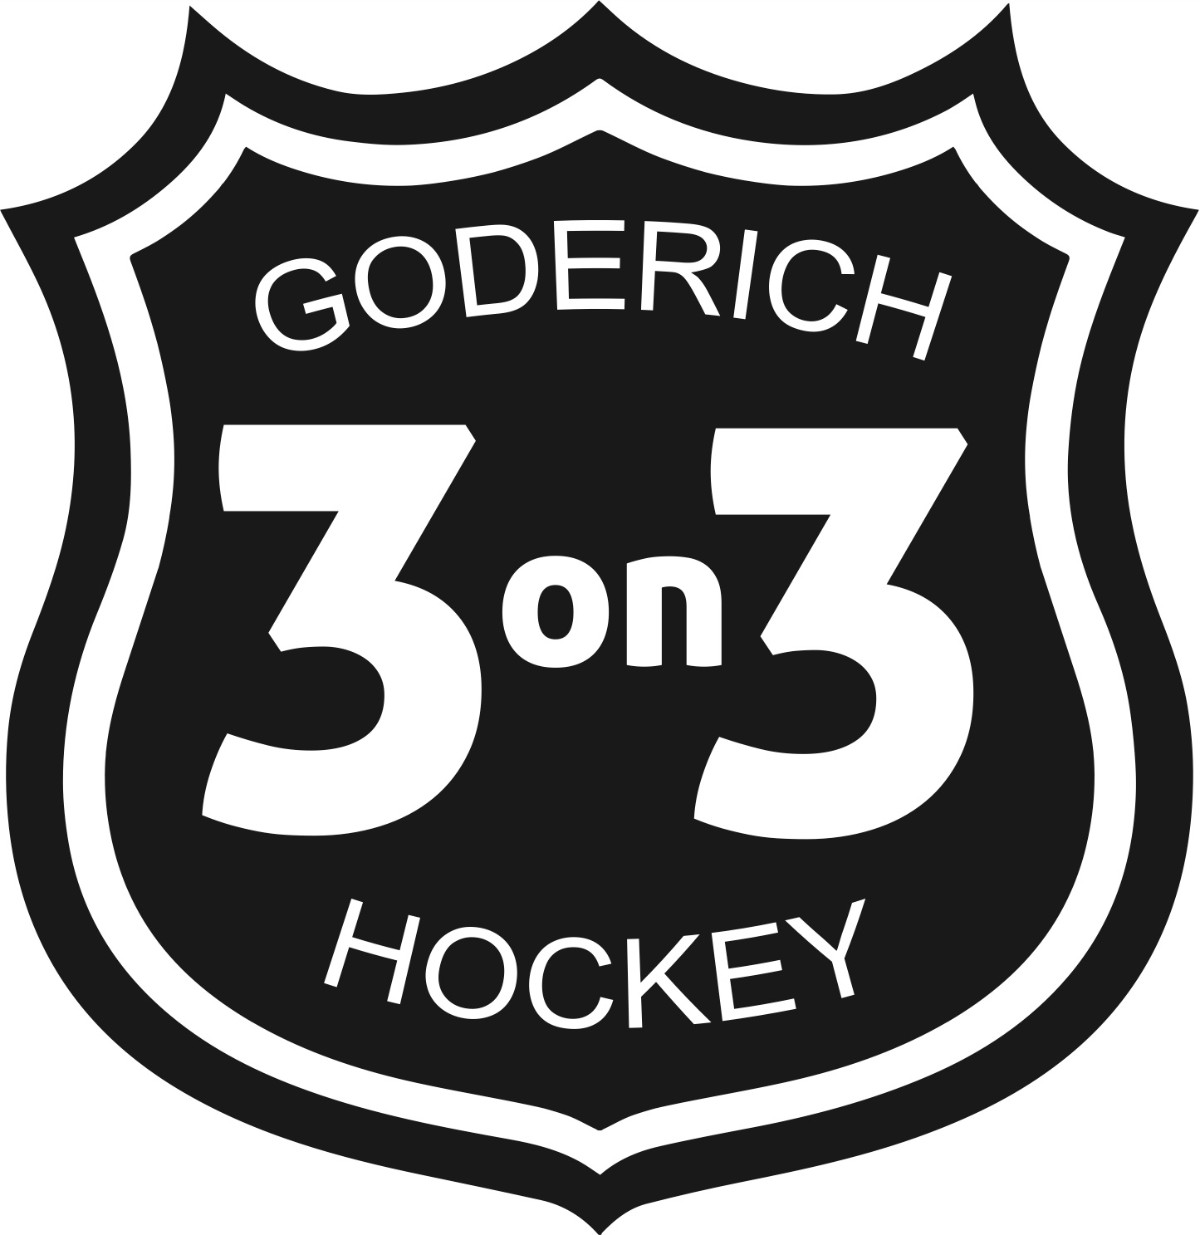 3_on_3_Goderich_Hockey.jpg